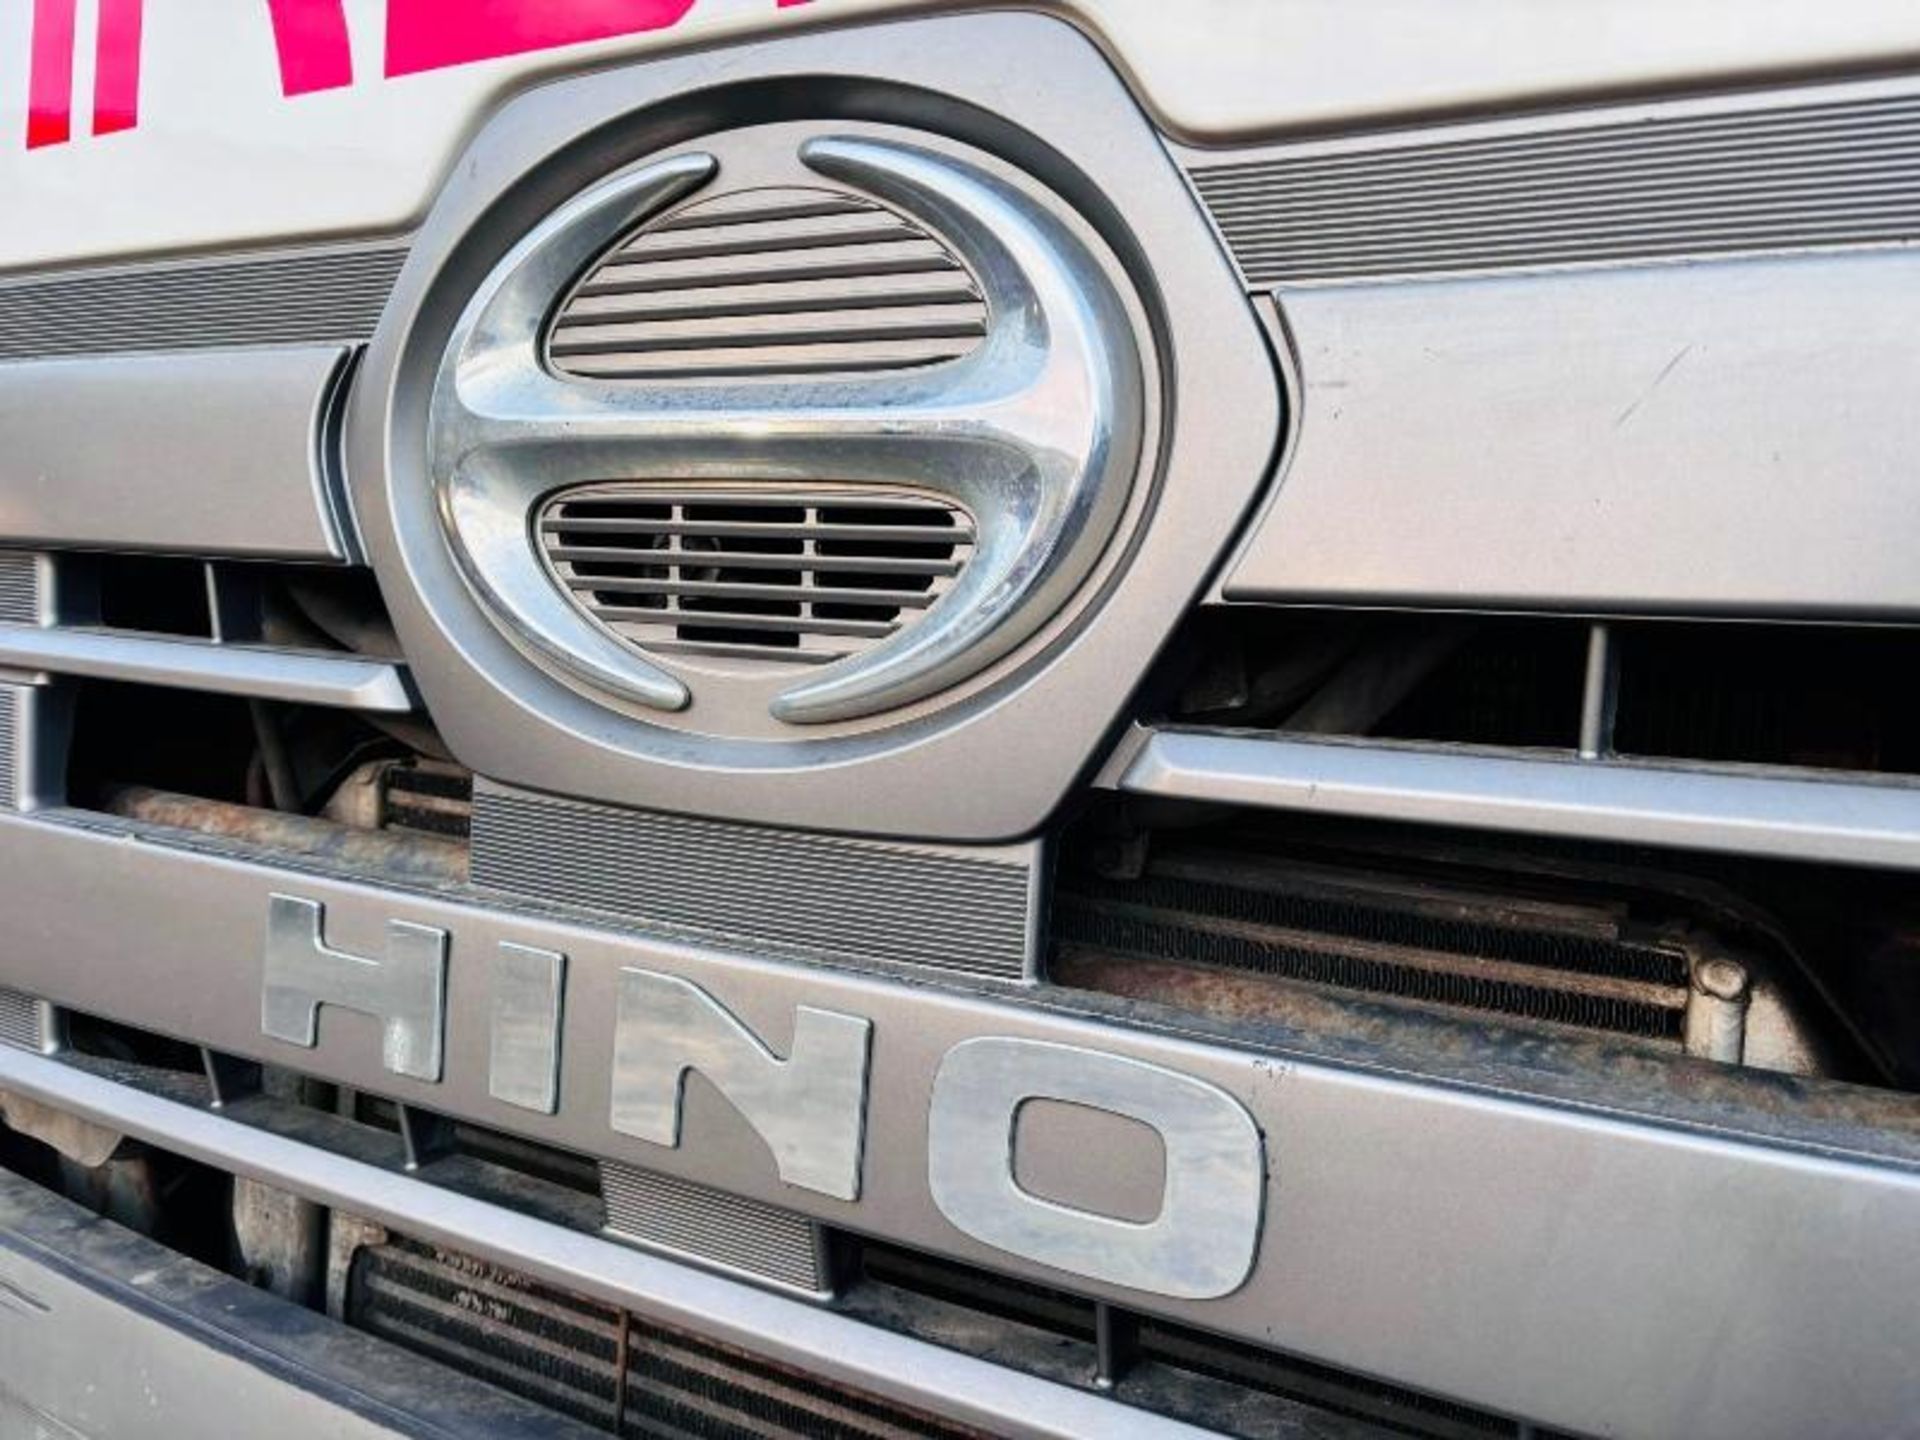 HINO FY1EUP 8X4 DOUBLE DRIVE TIPPER C/W MANUAL GEAR BOX, CRANE & GRAB - Image 6 of 20